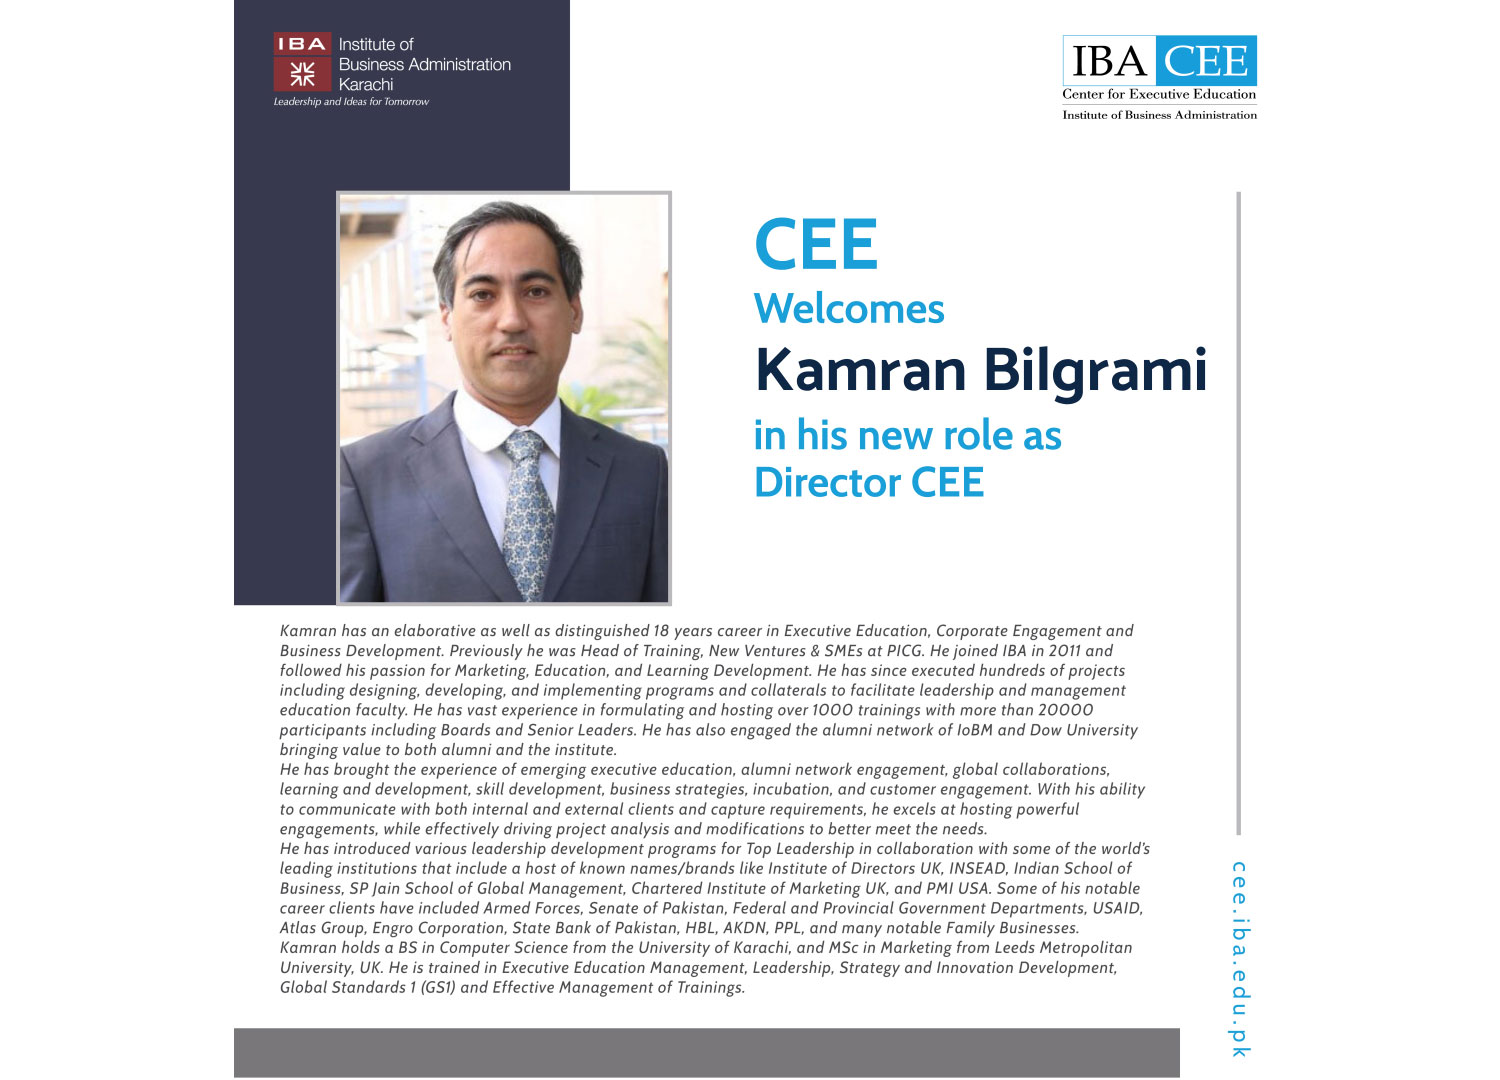 Center for Executive Education at IBA Karachi Welcomes New Director, Mr. Kamran Bilgrami